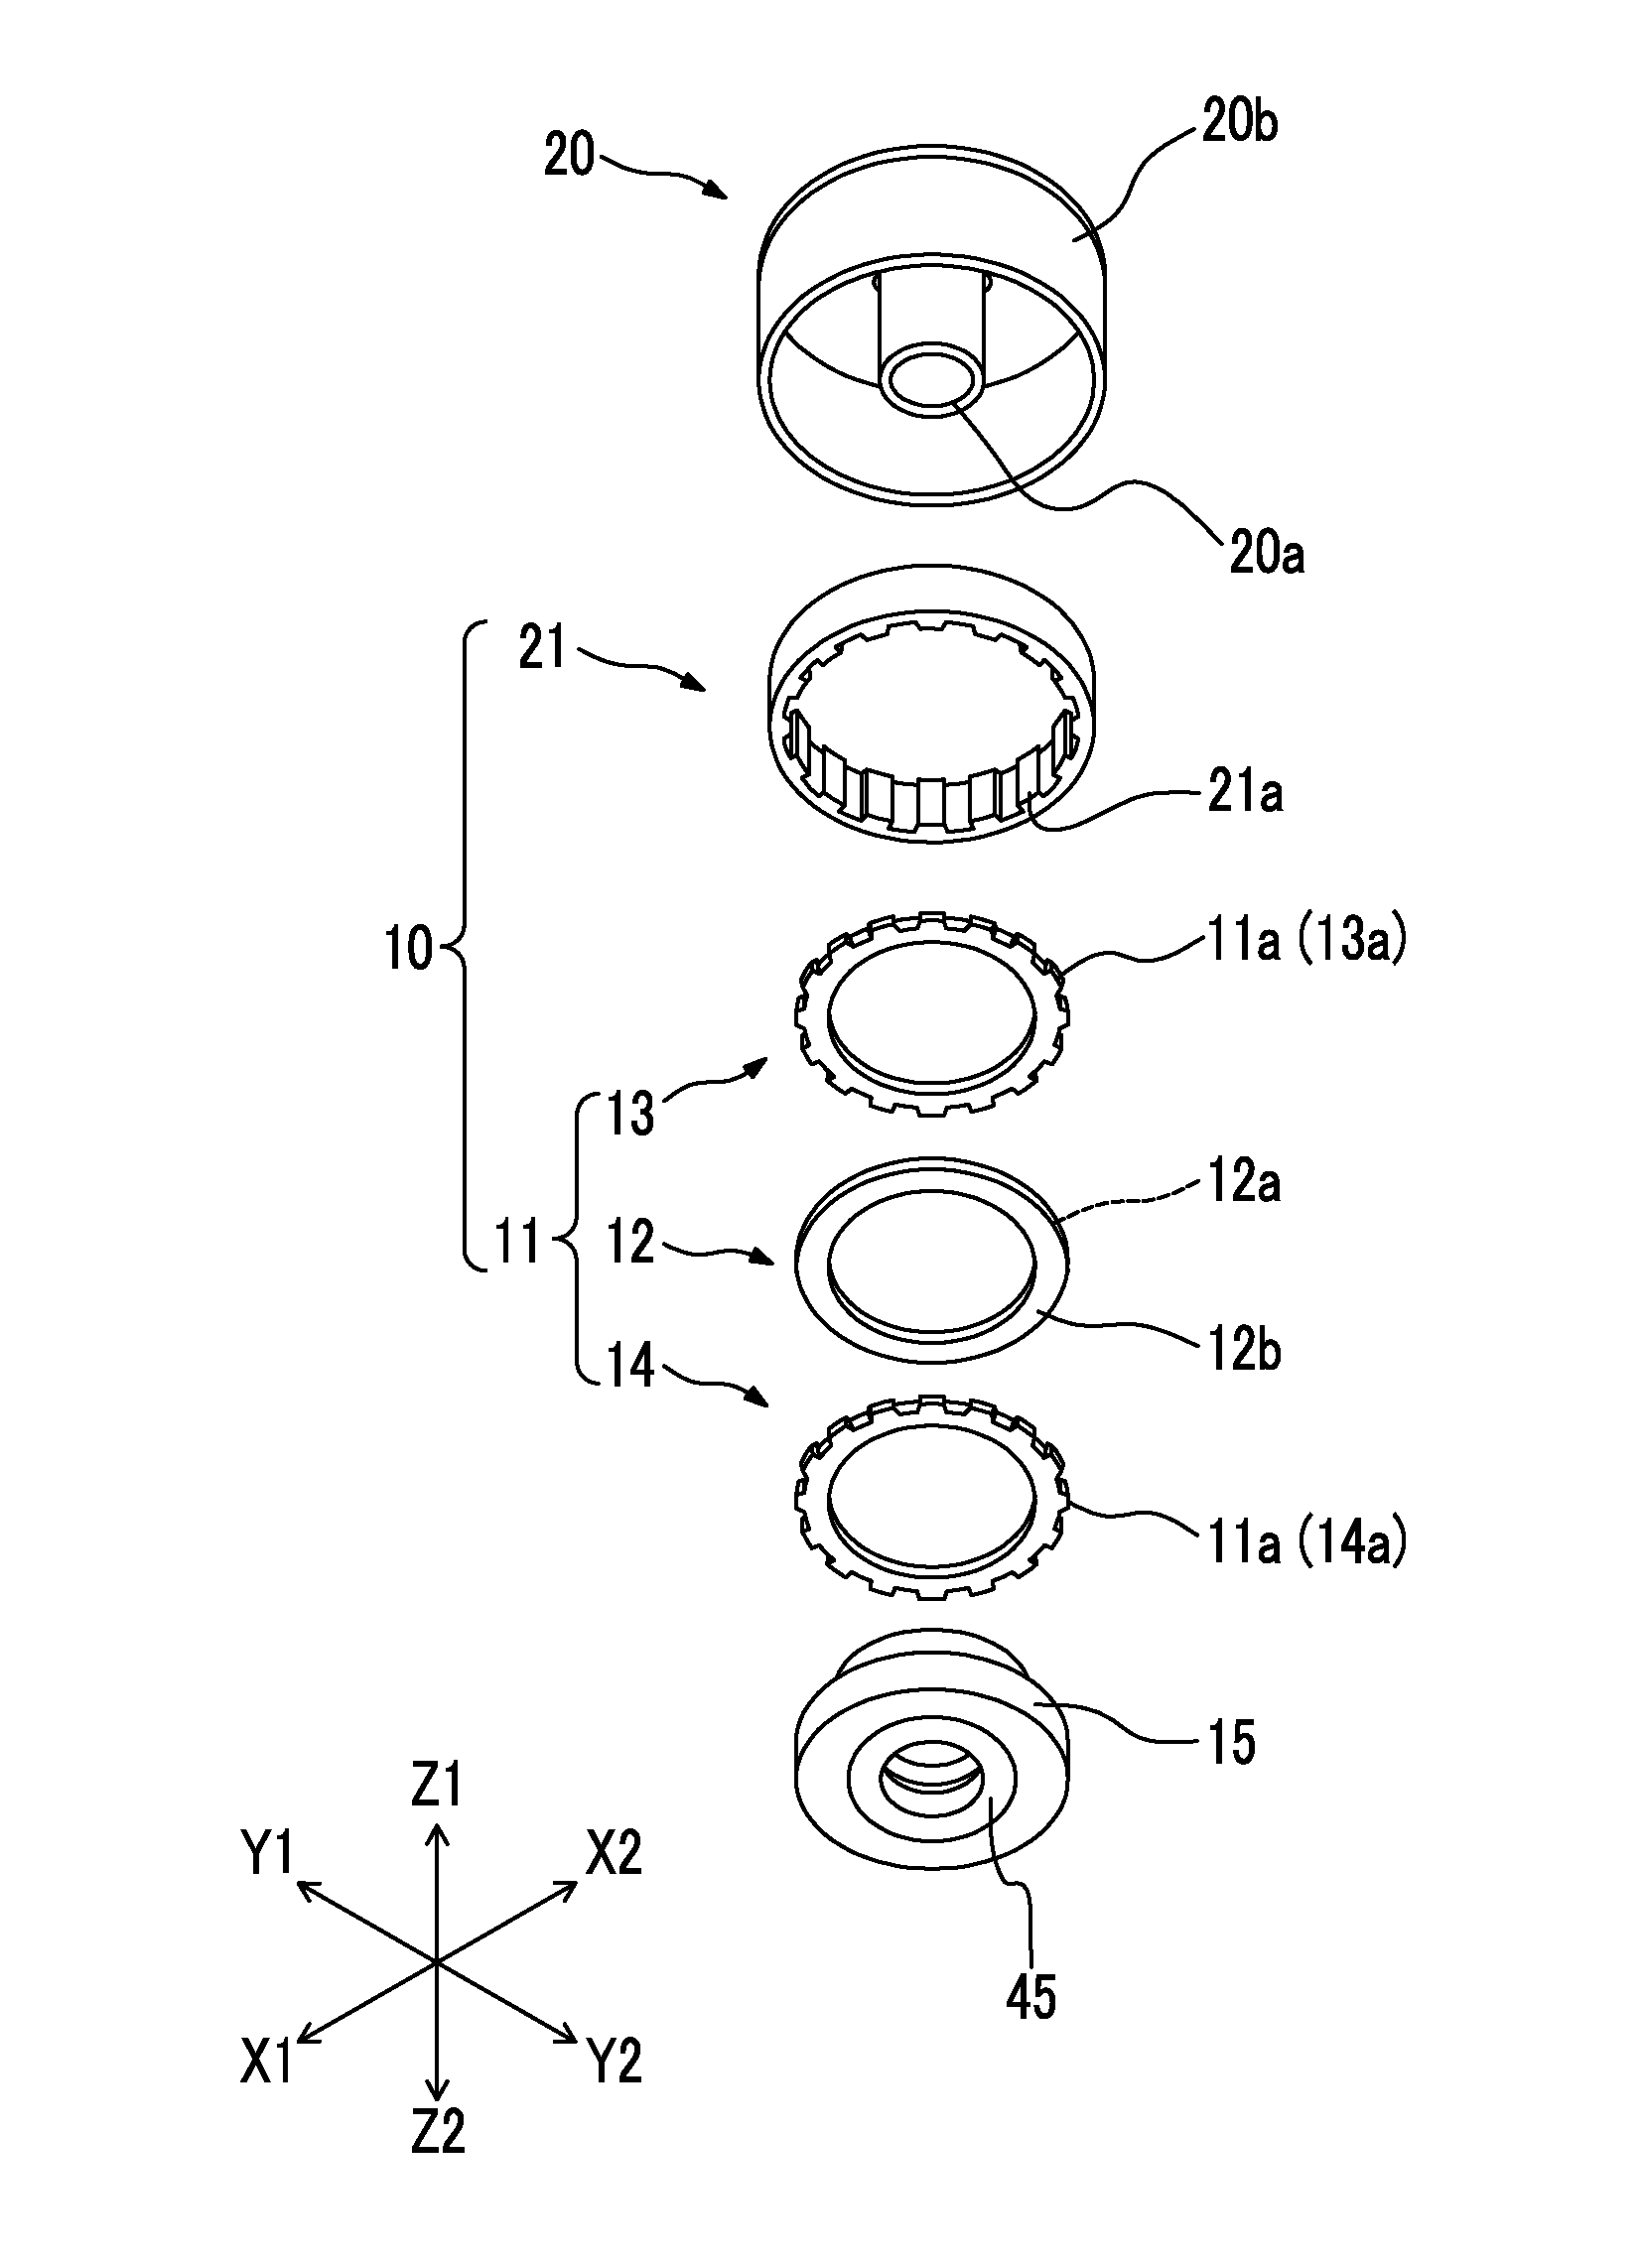 Rotary input device